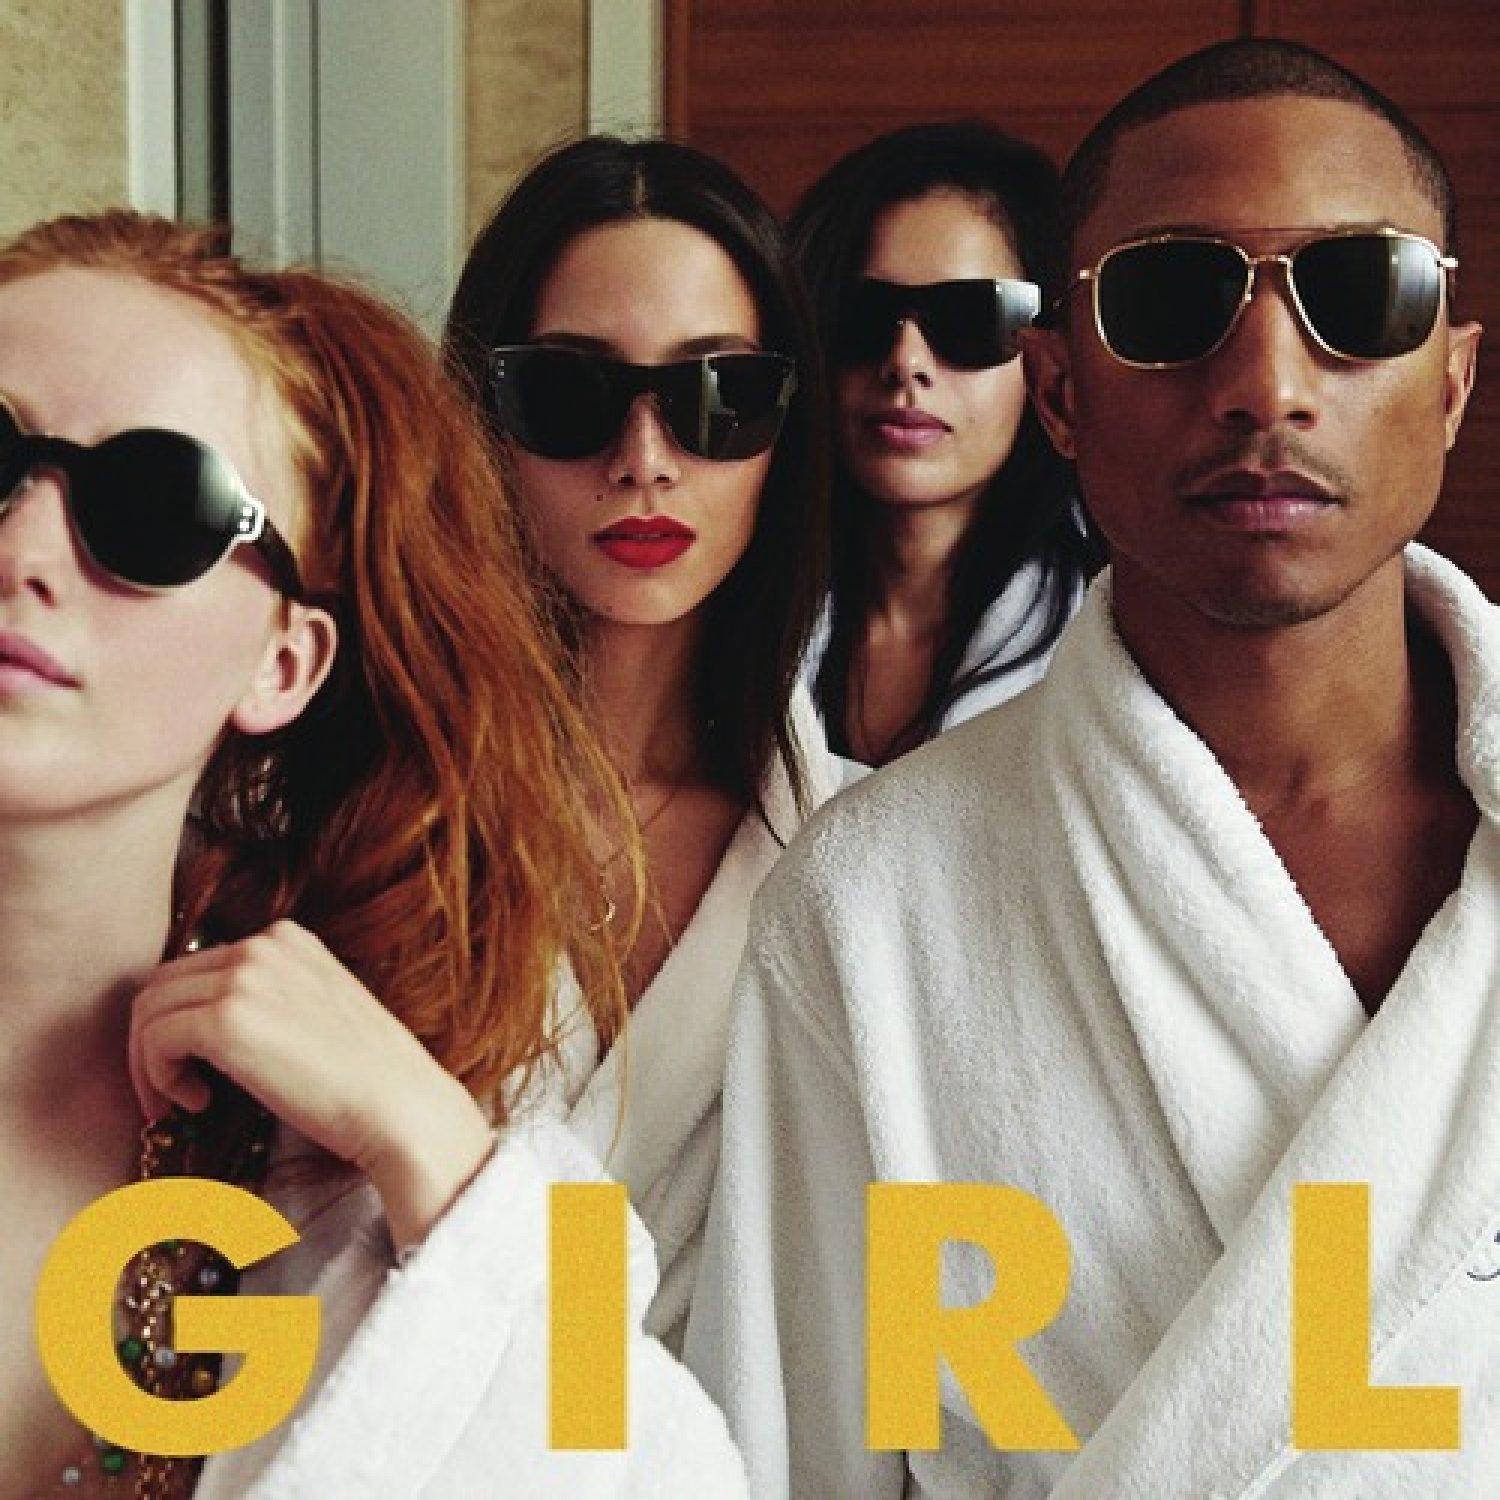 GIRL, le nouvel album de Pharrell Williams